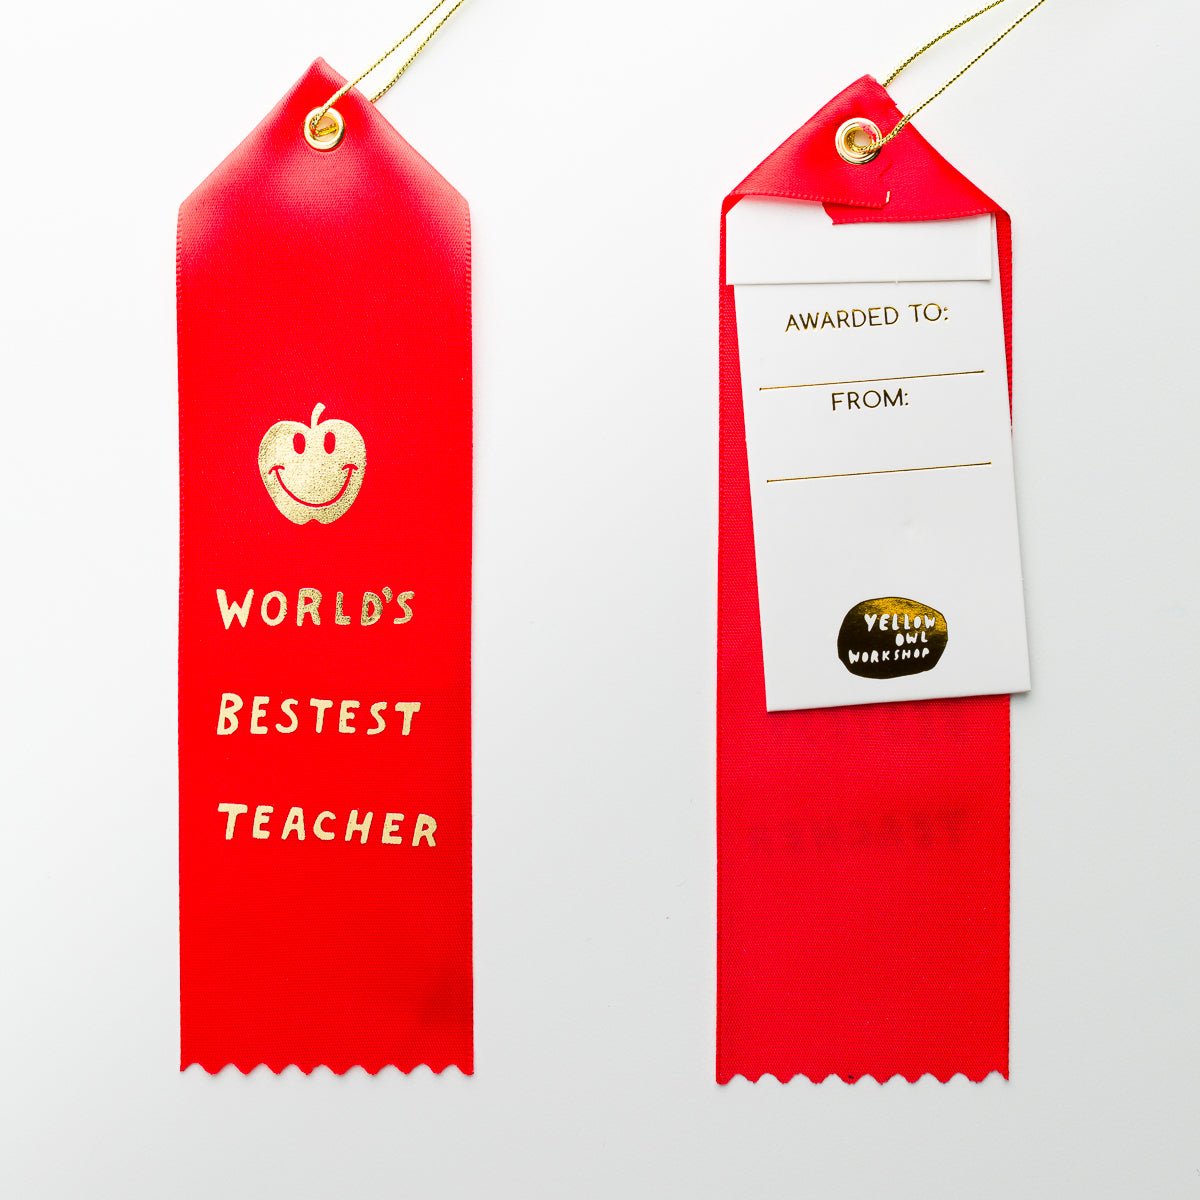 World's Bestest Teacher - Award Ribbon Card - Yellow Owl Workshop